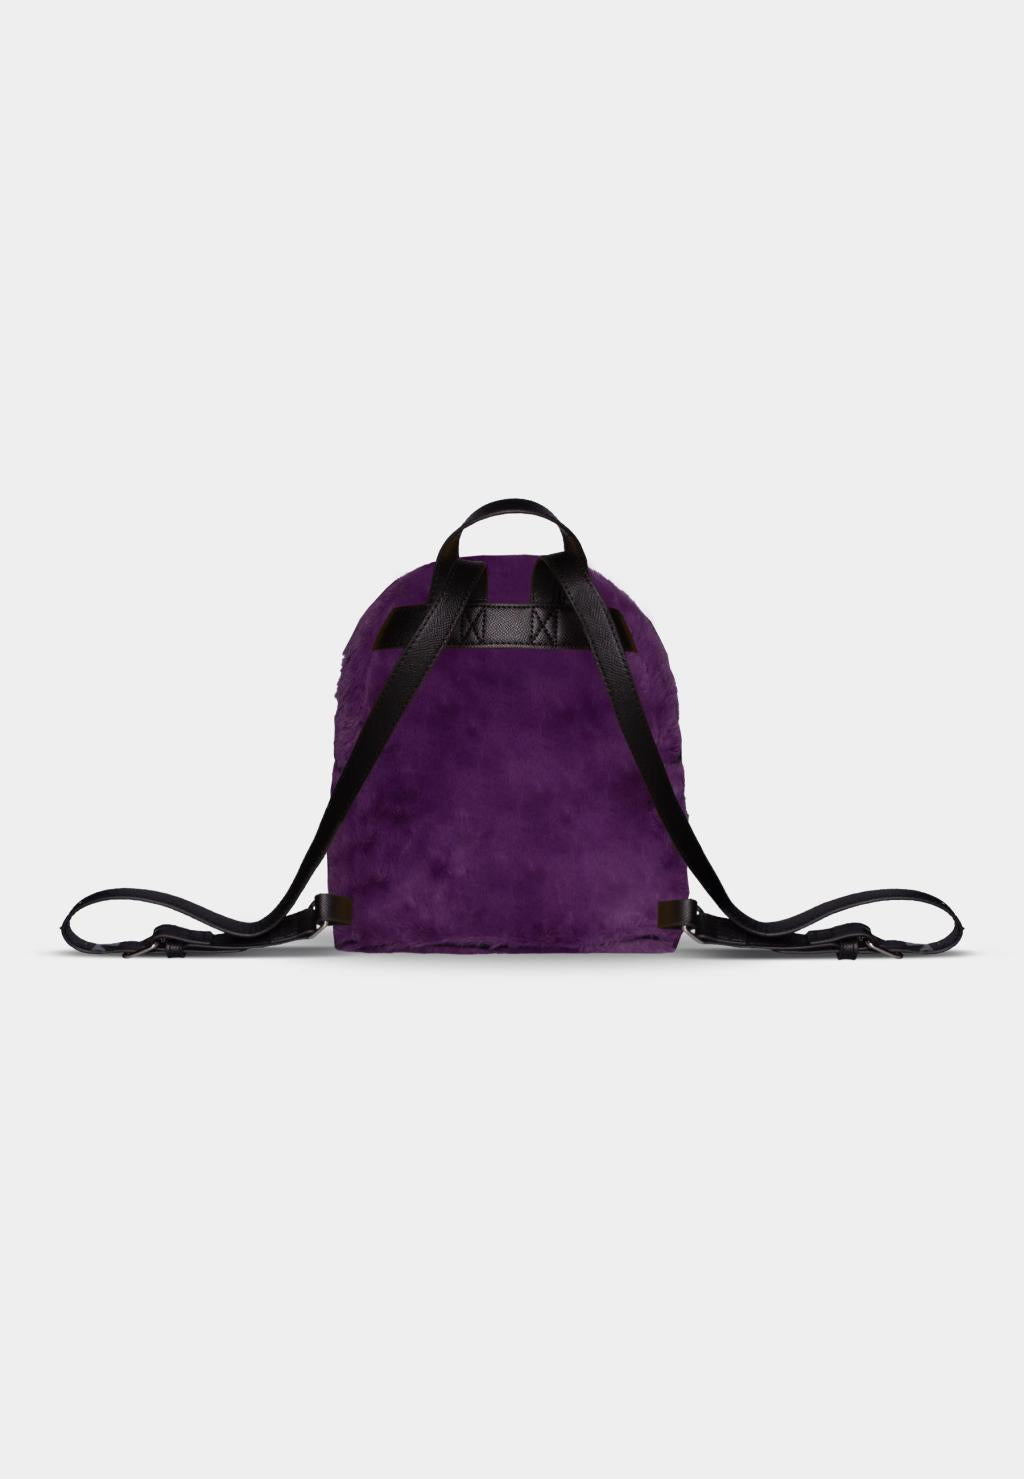 POKEMON - Gengar - Heady - Backpack Novelty '26x20x12cm'